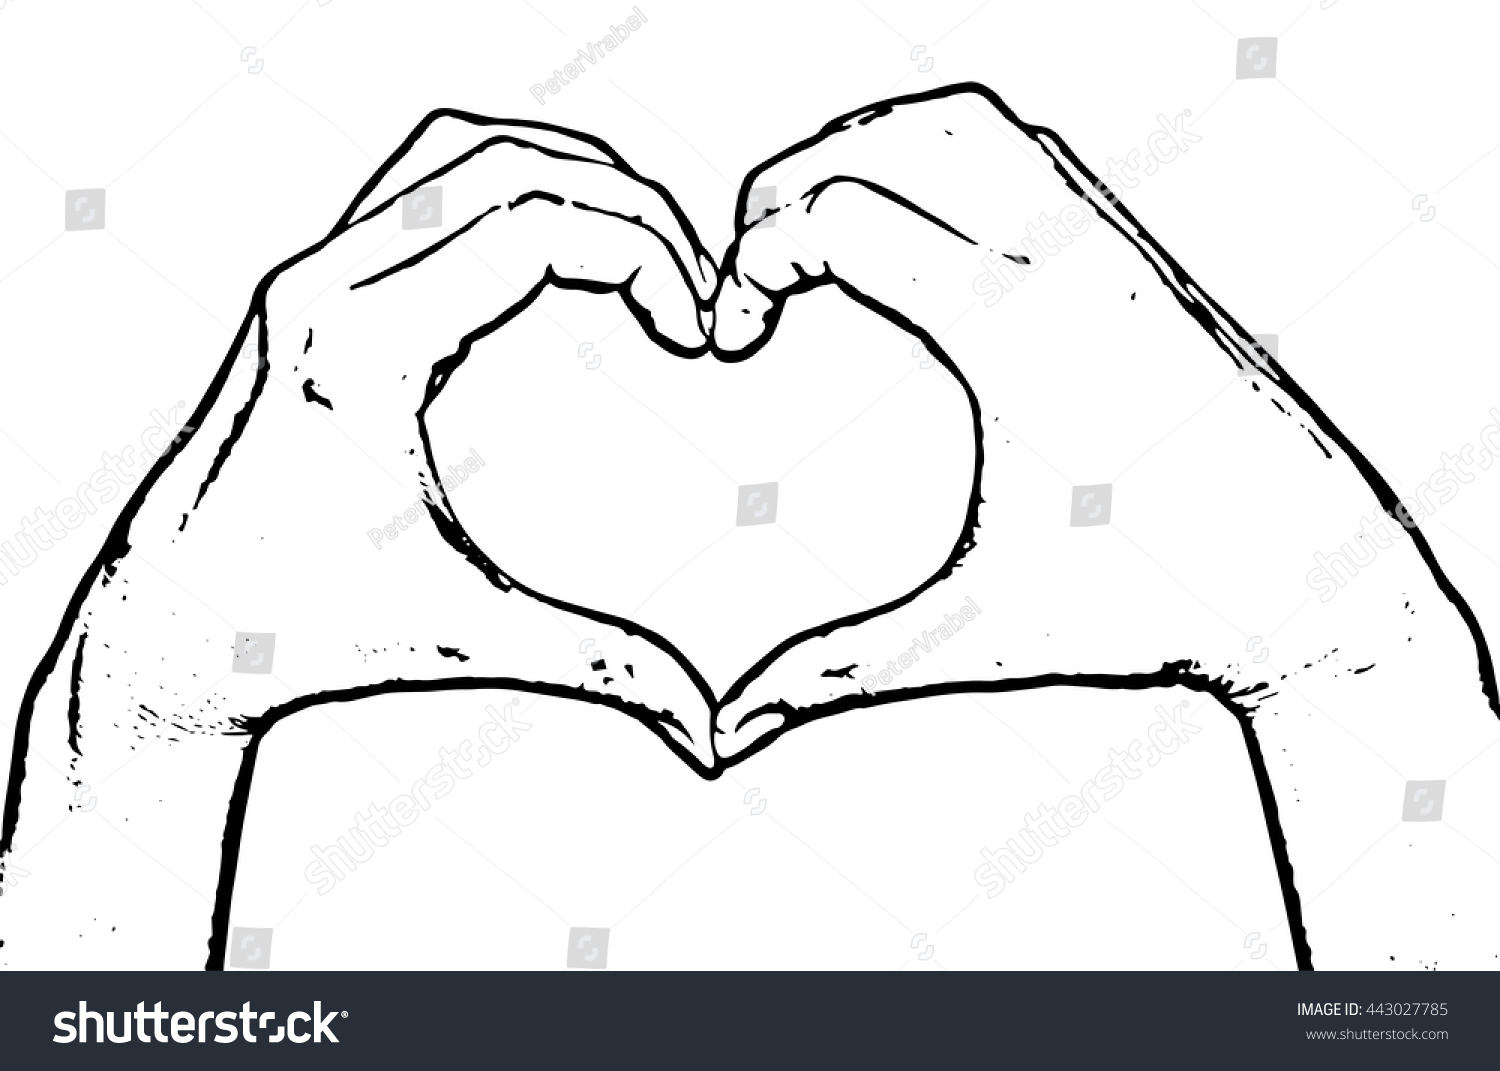 hands making a heart sketch